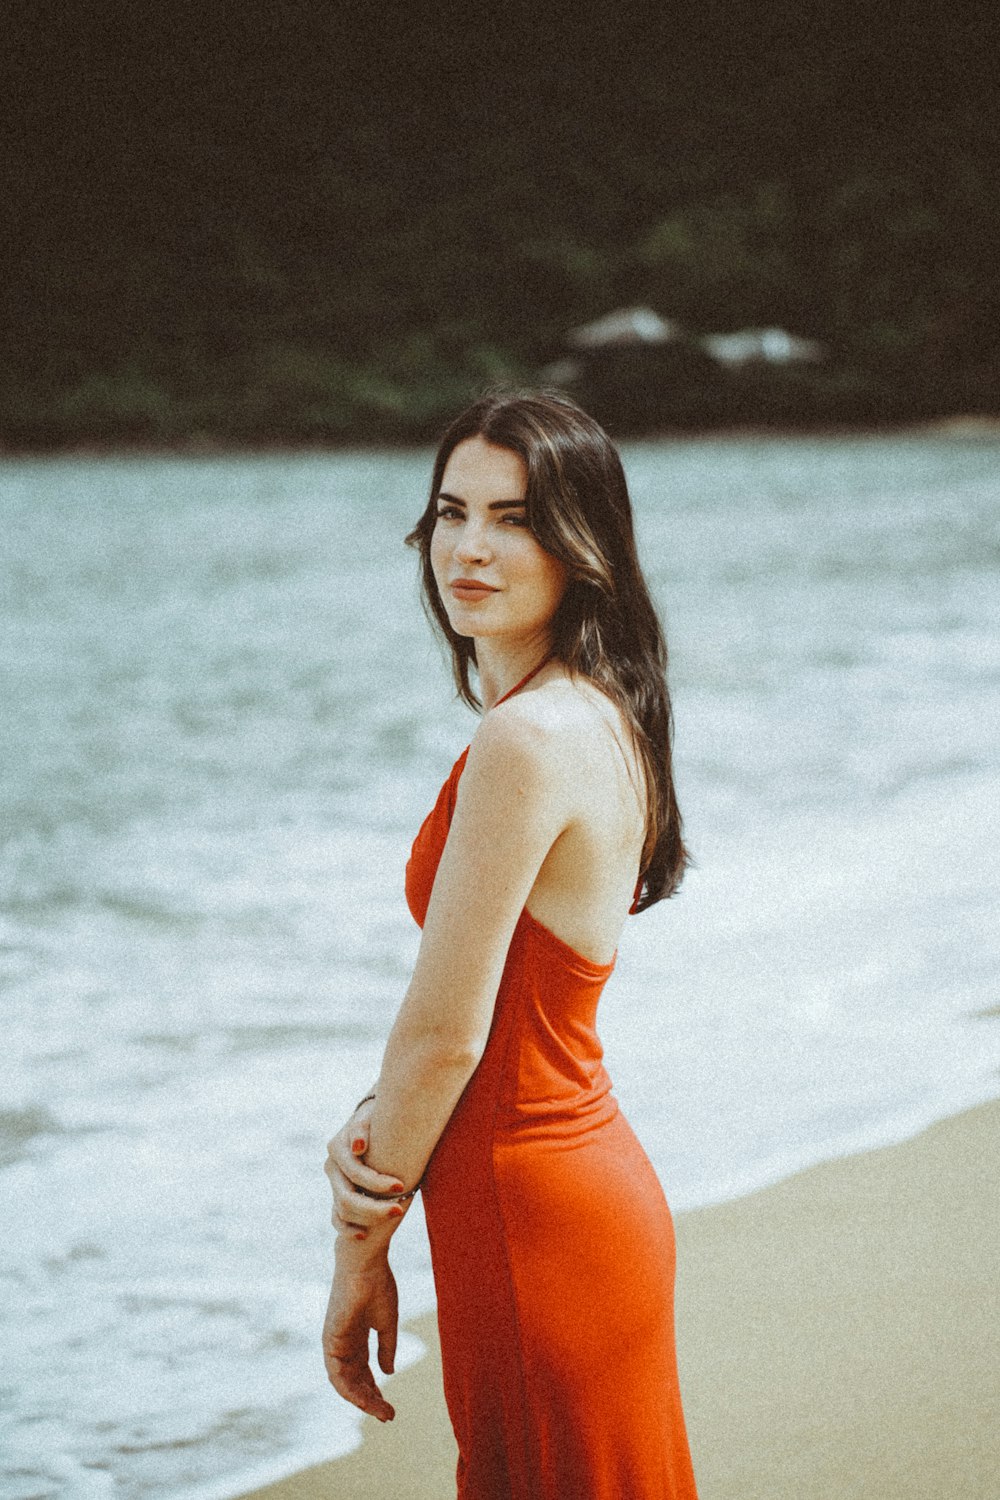 a woman in an orange dress on a beach